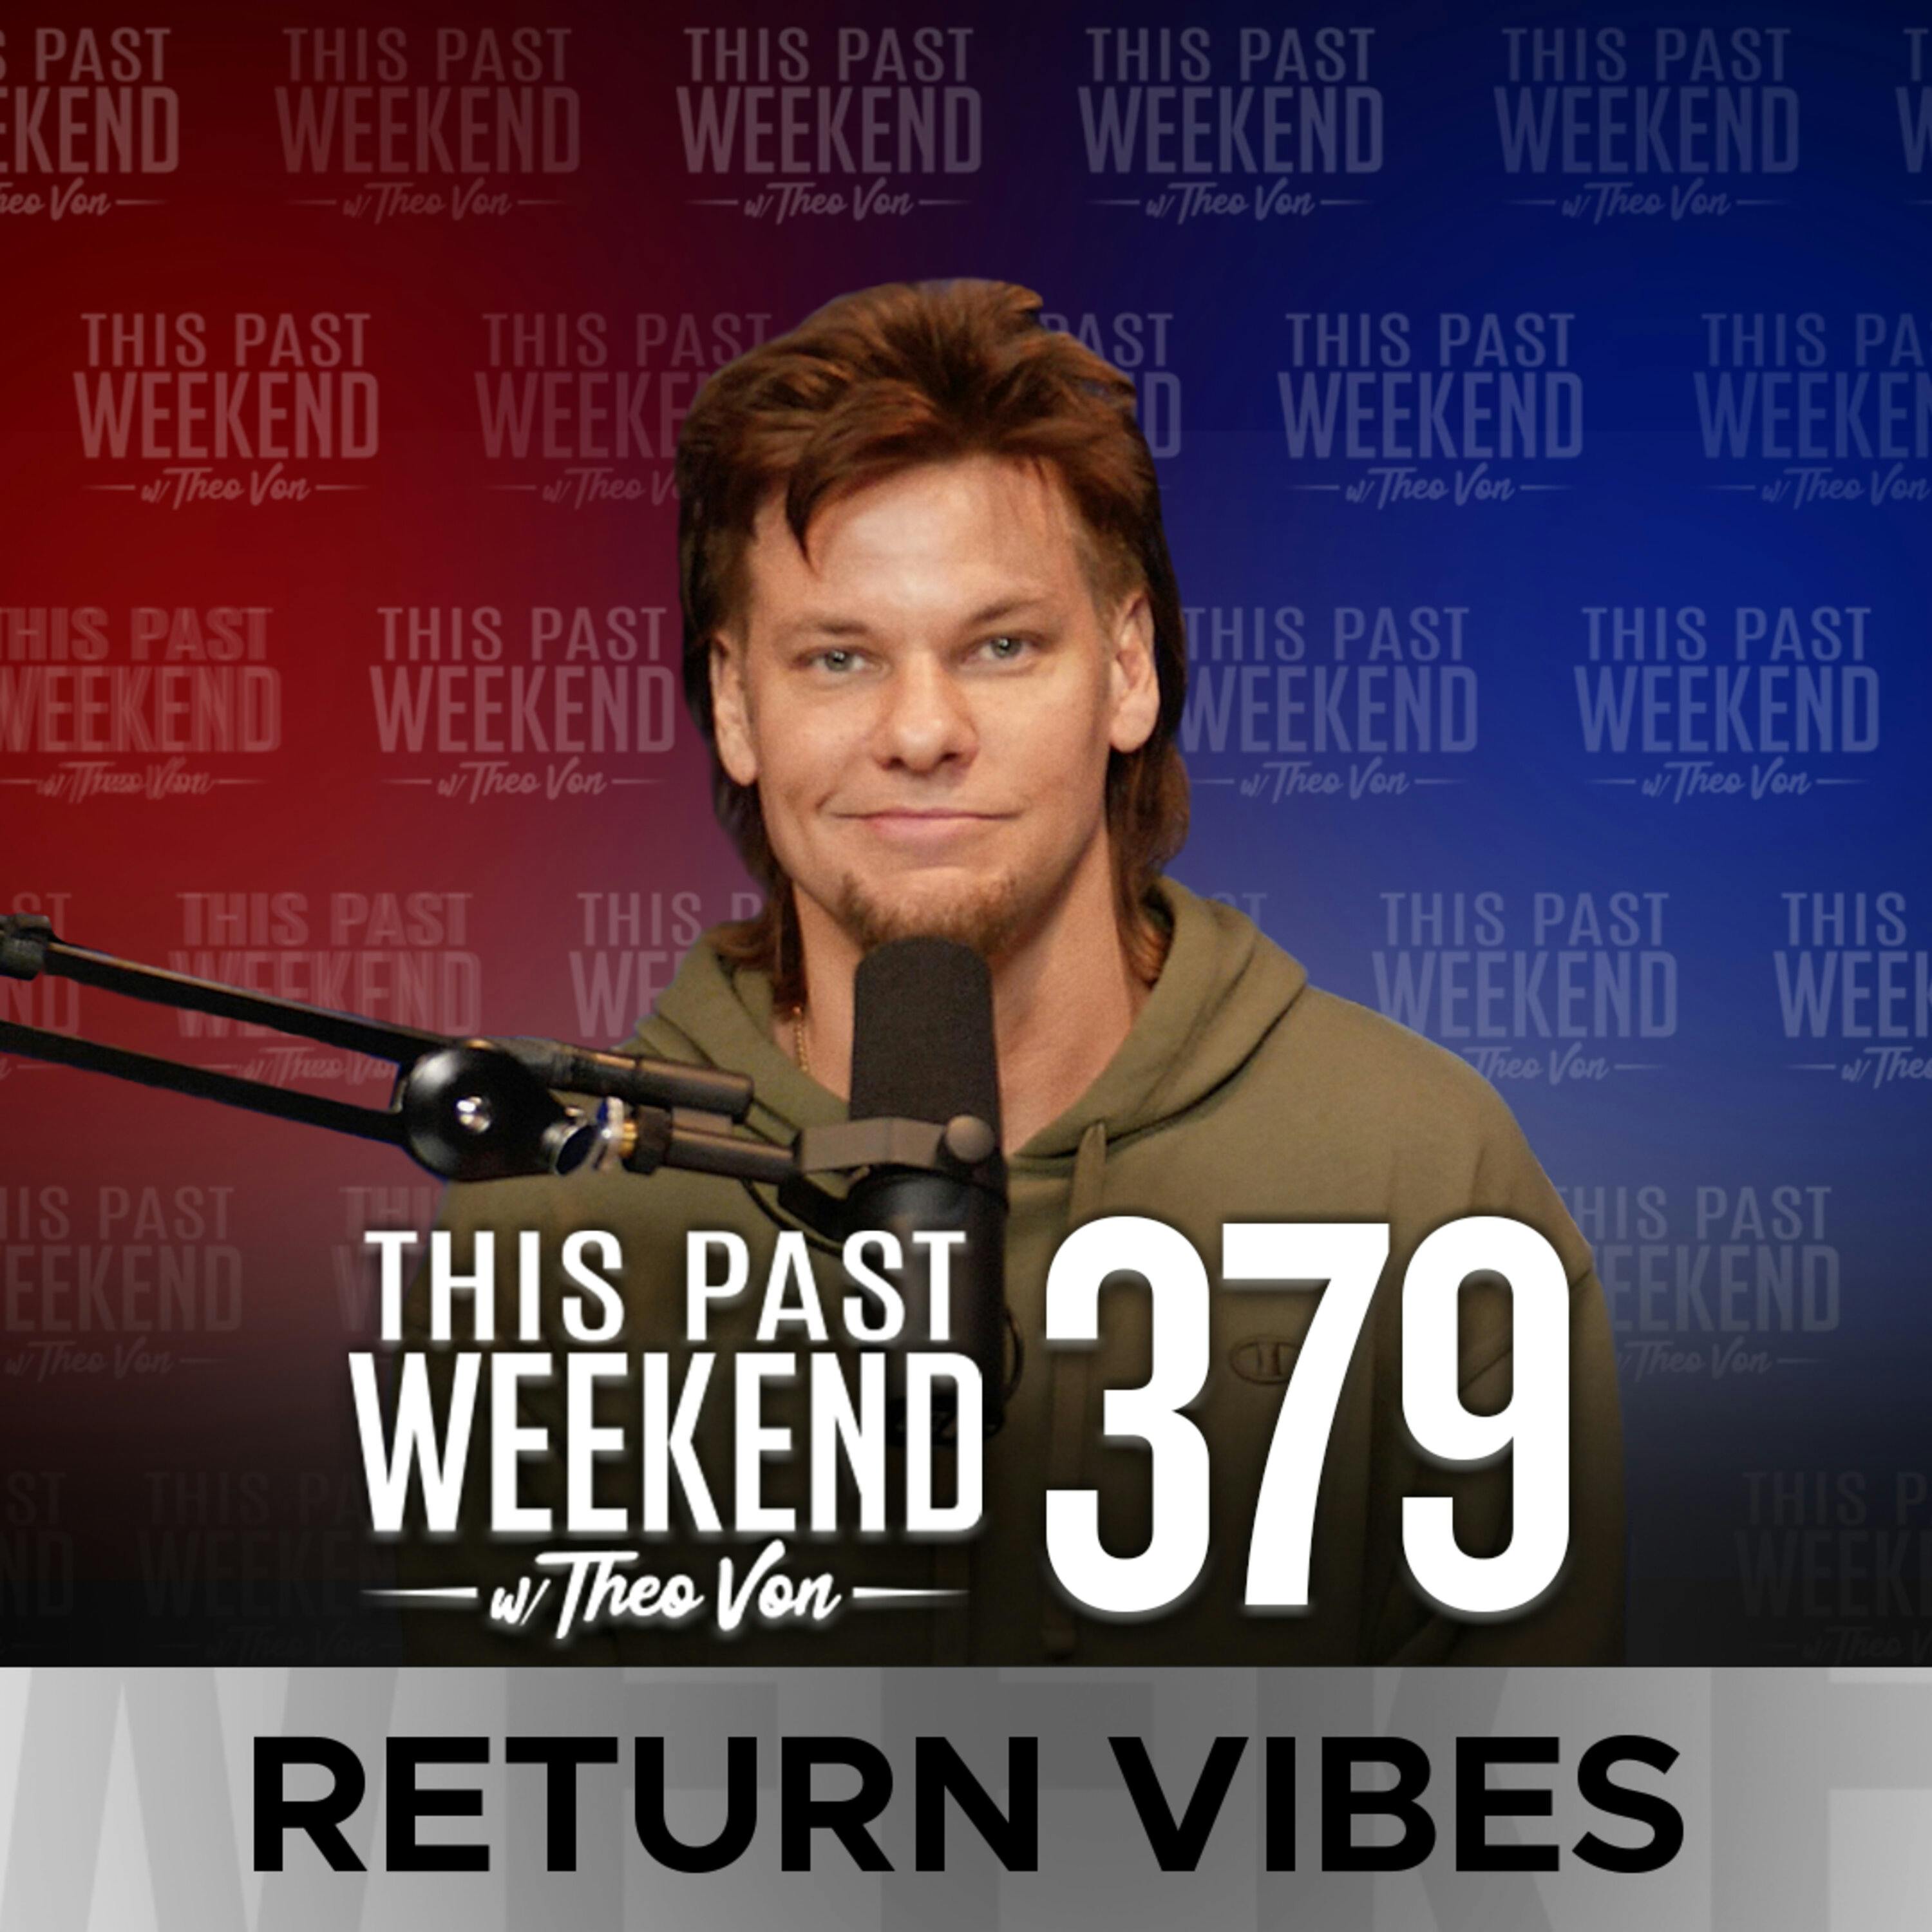 E379 Return Vibes by Theo Von